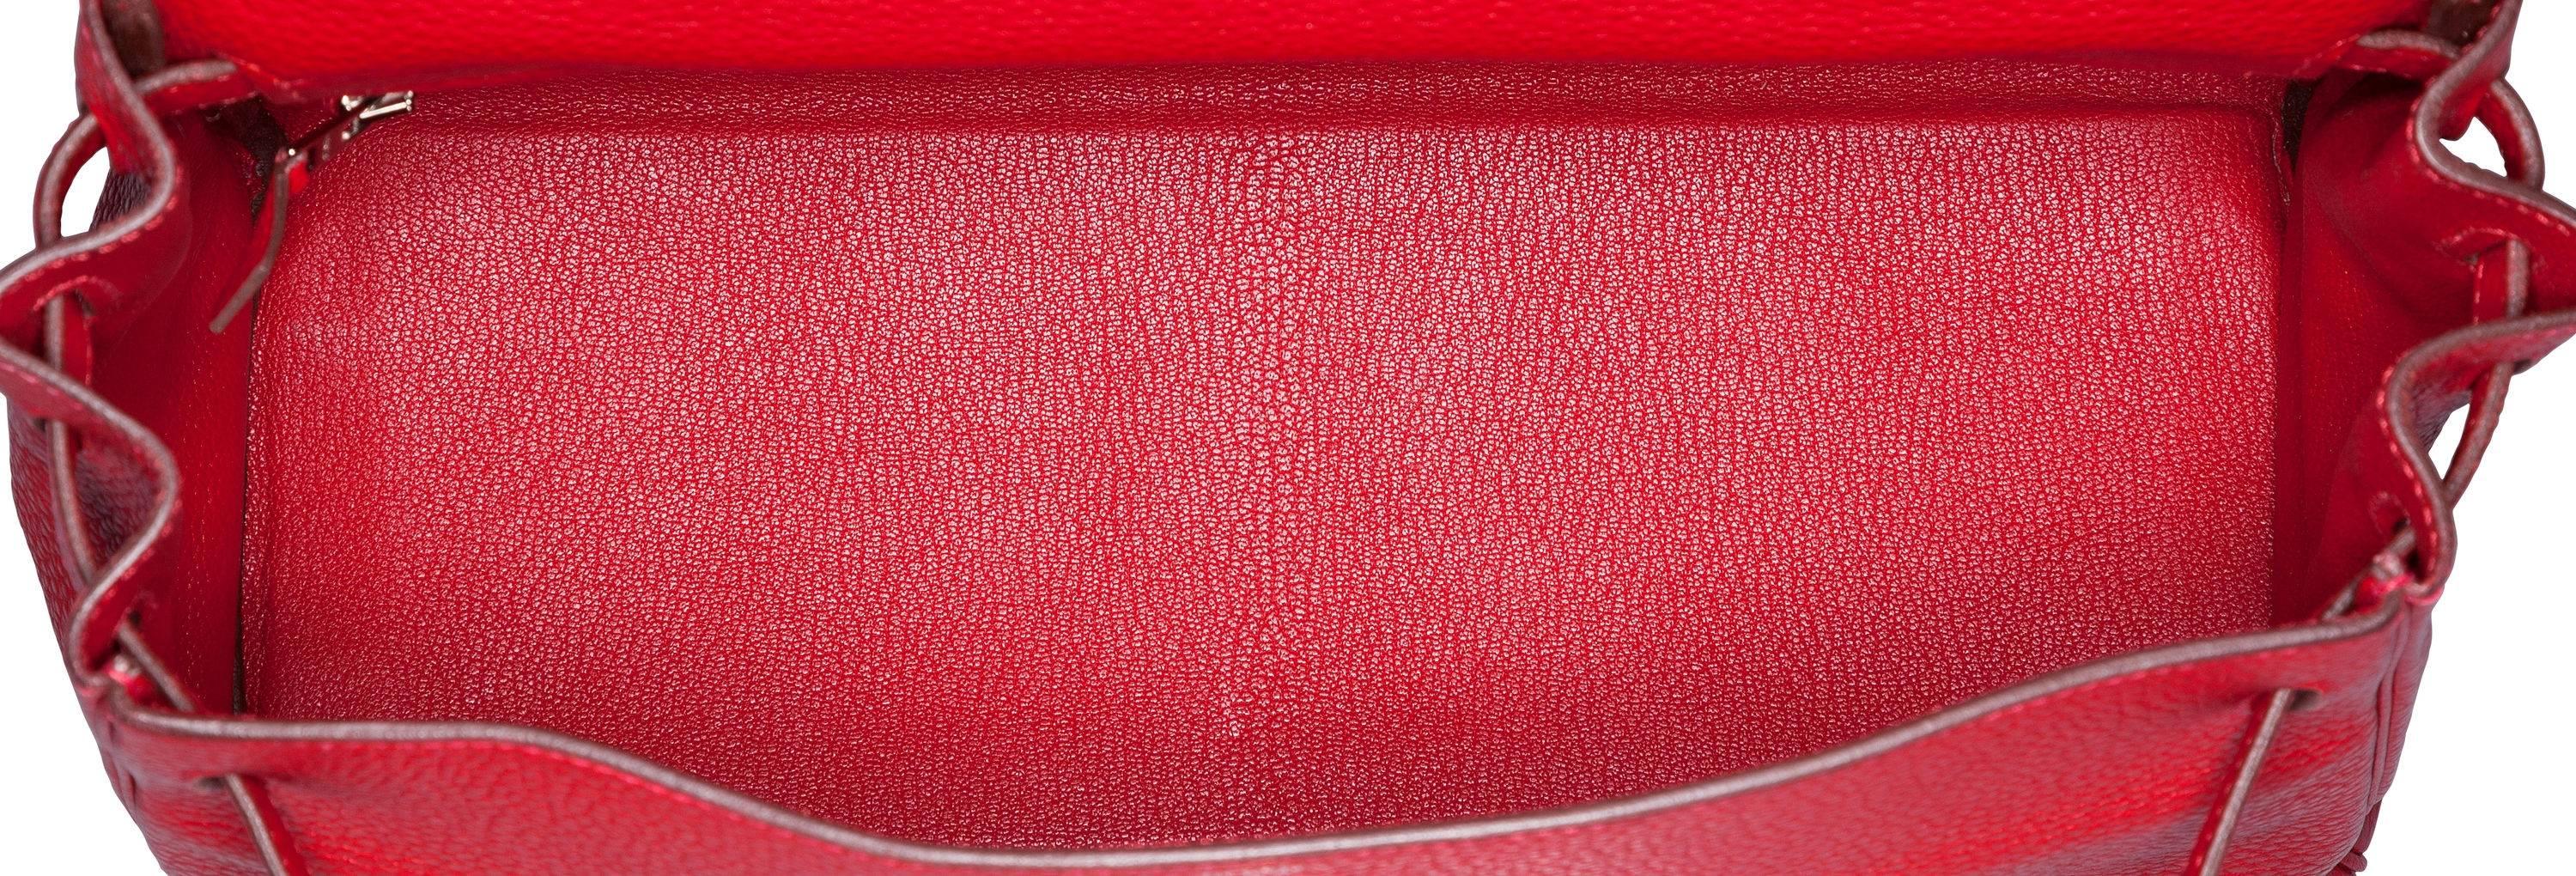 Hermes 32cm Rouge Vif Clemence Leather Retourne Kelly Bag For Sale 1